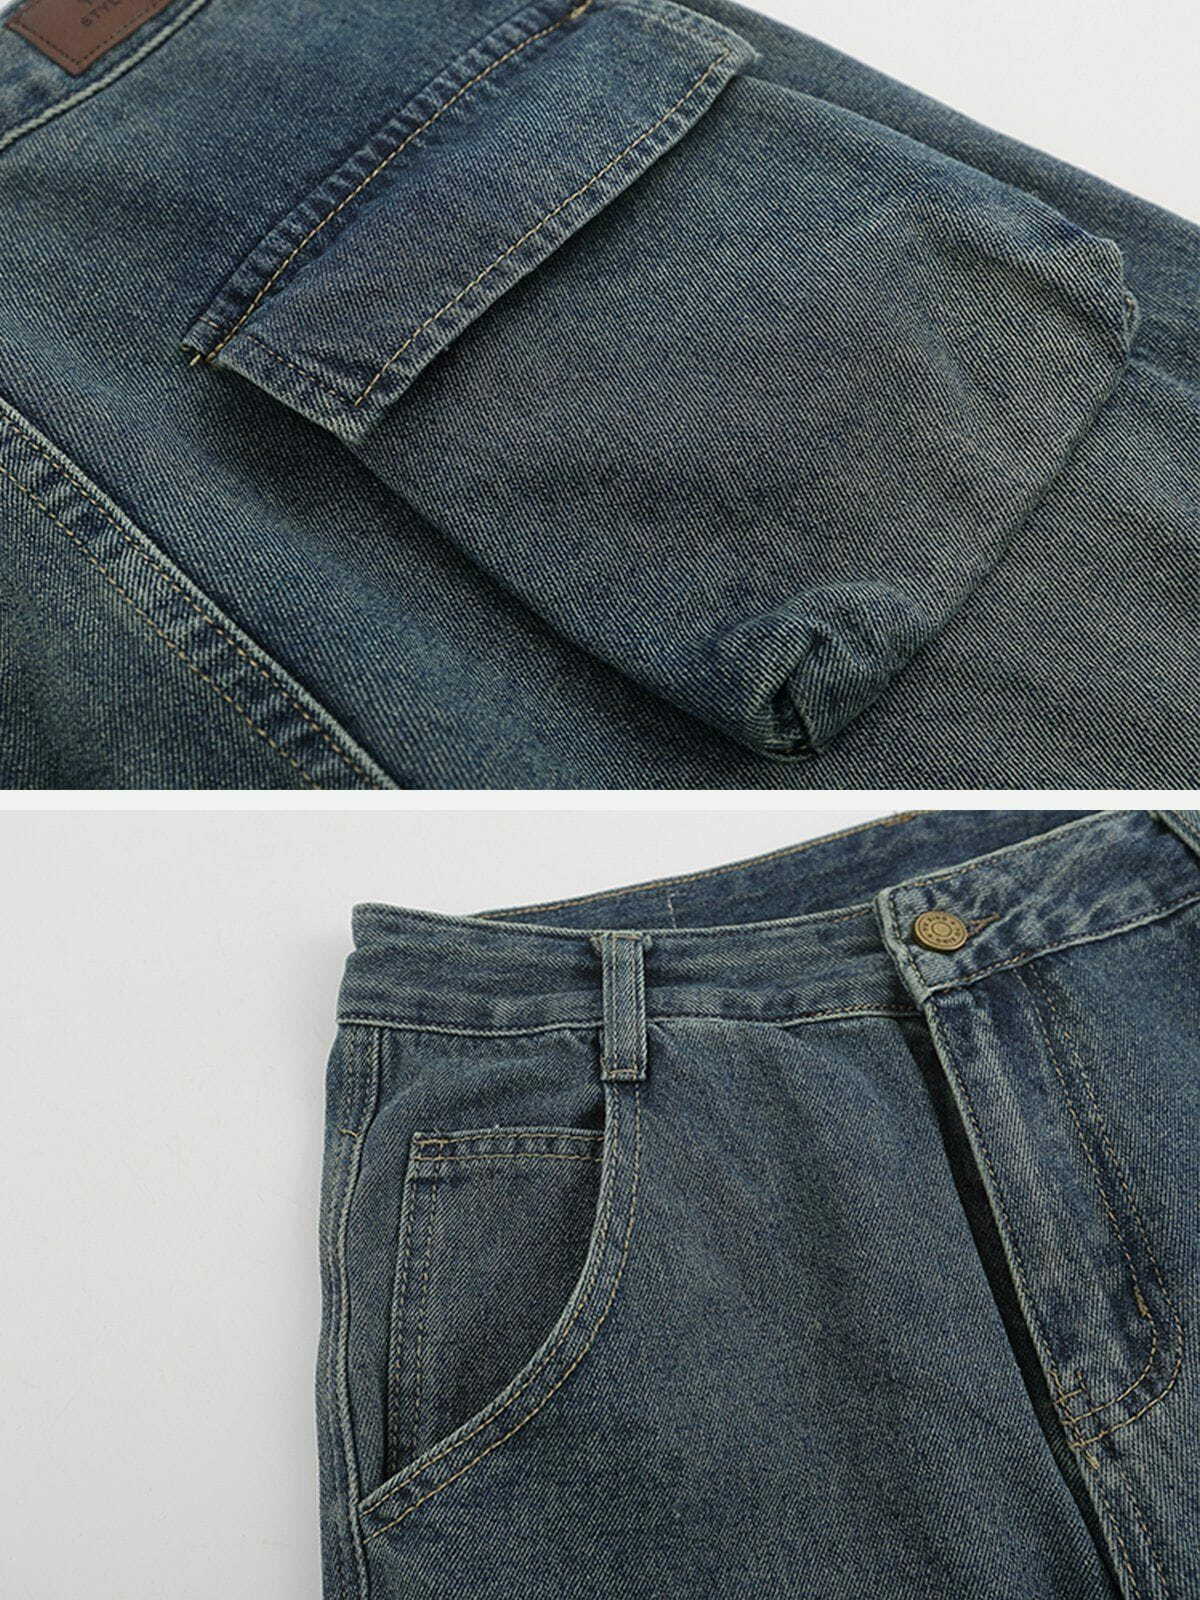 versatile multipocket cargo jeans edgy & functional streetwear 7645